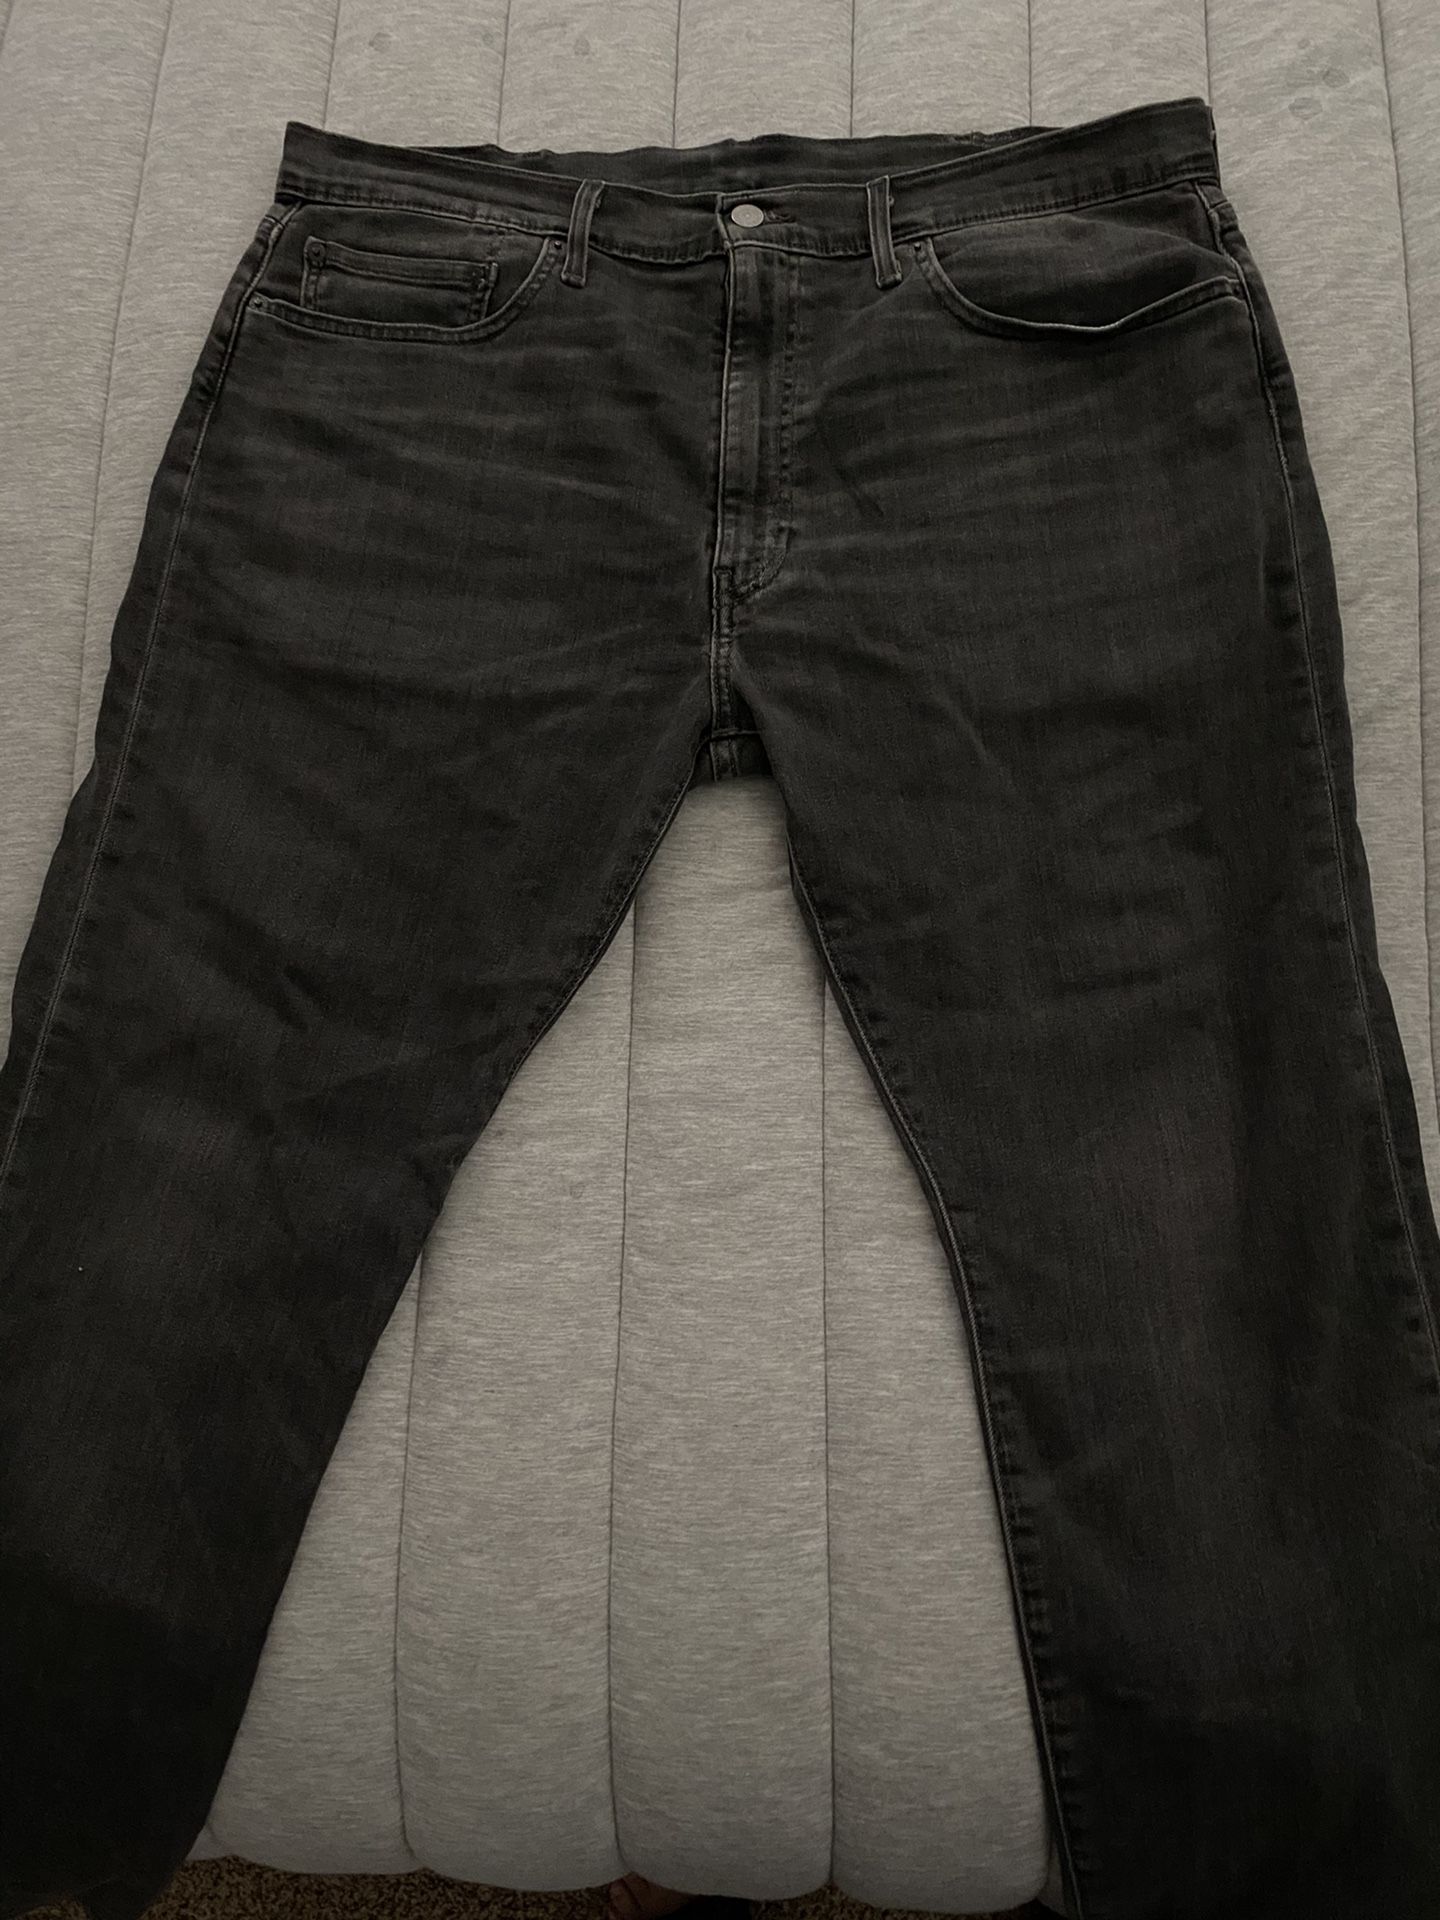 Levi’s Mens 502 Taper Jeans (Size 38 x 30)